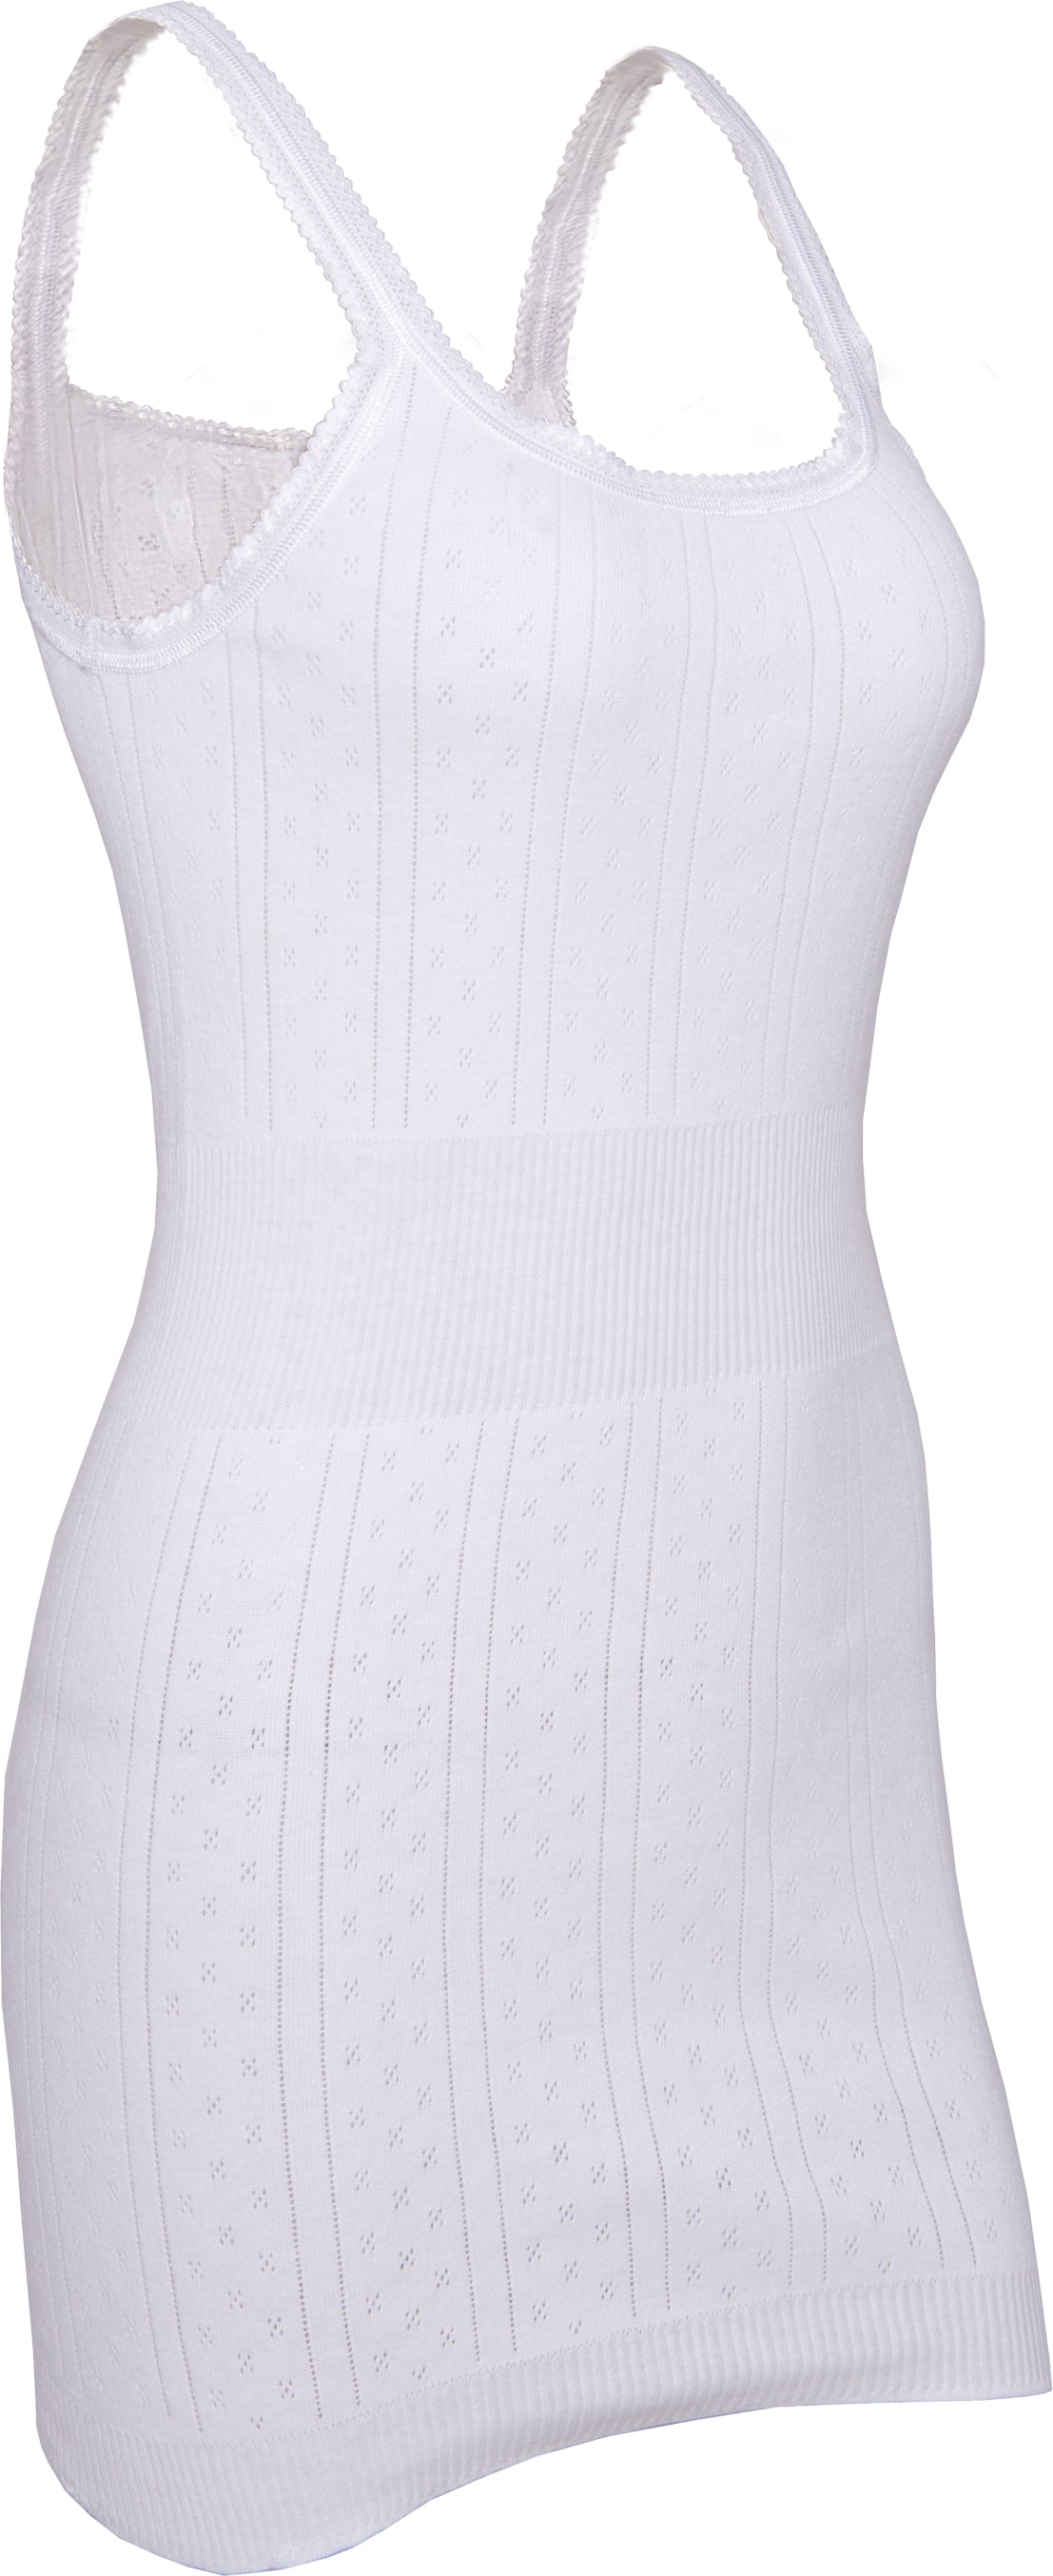 White Swan-Thermal Short Sleeve Vest Top-Style 302 – Whites of Kent Ltd